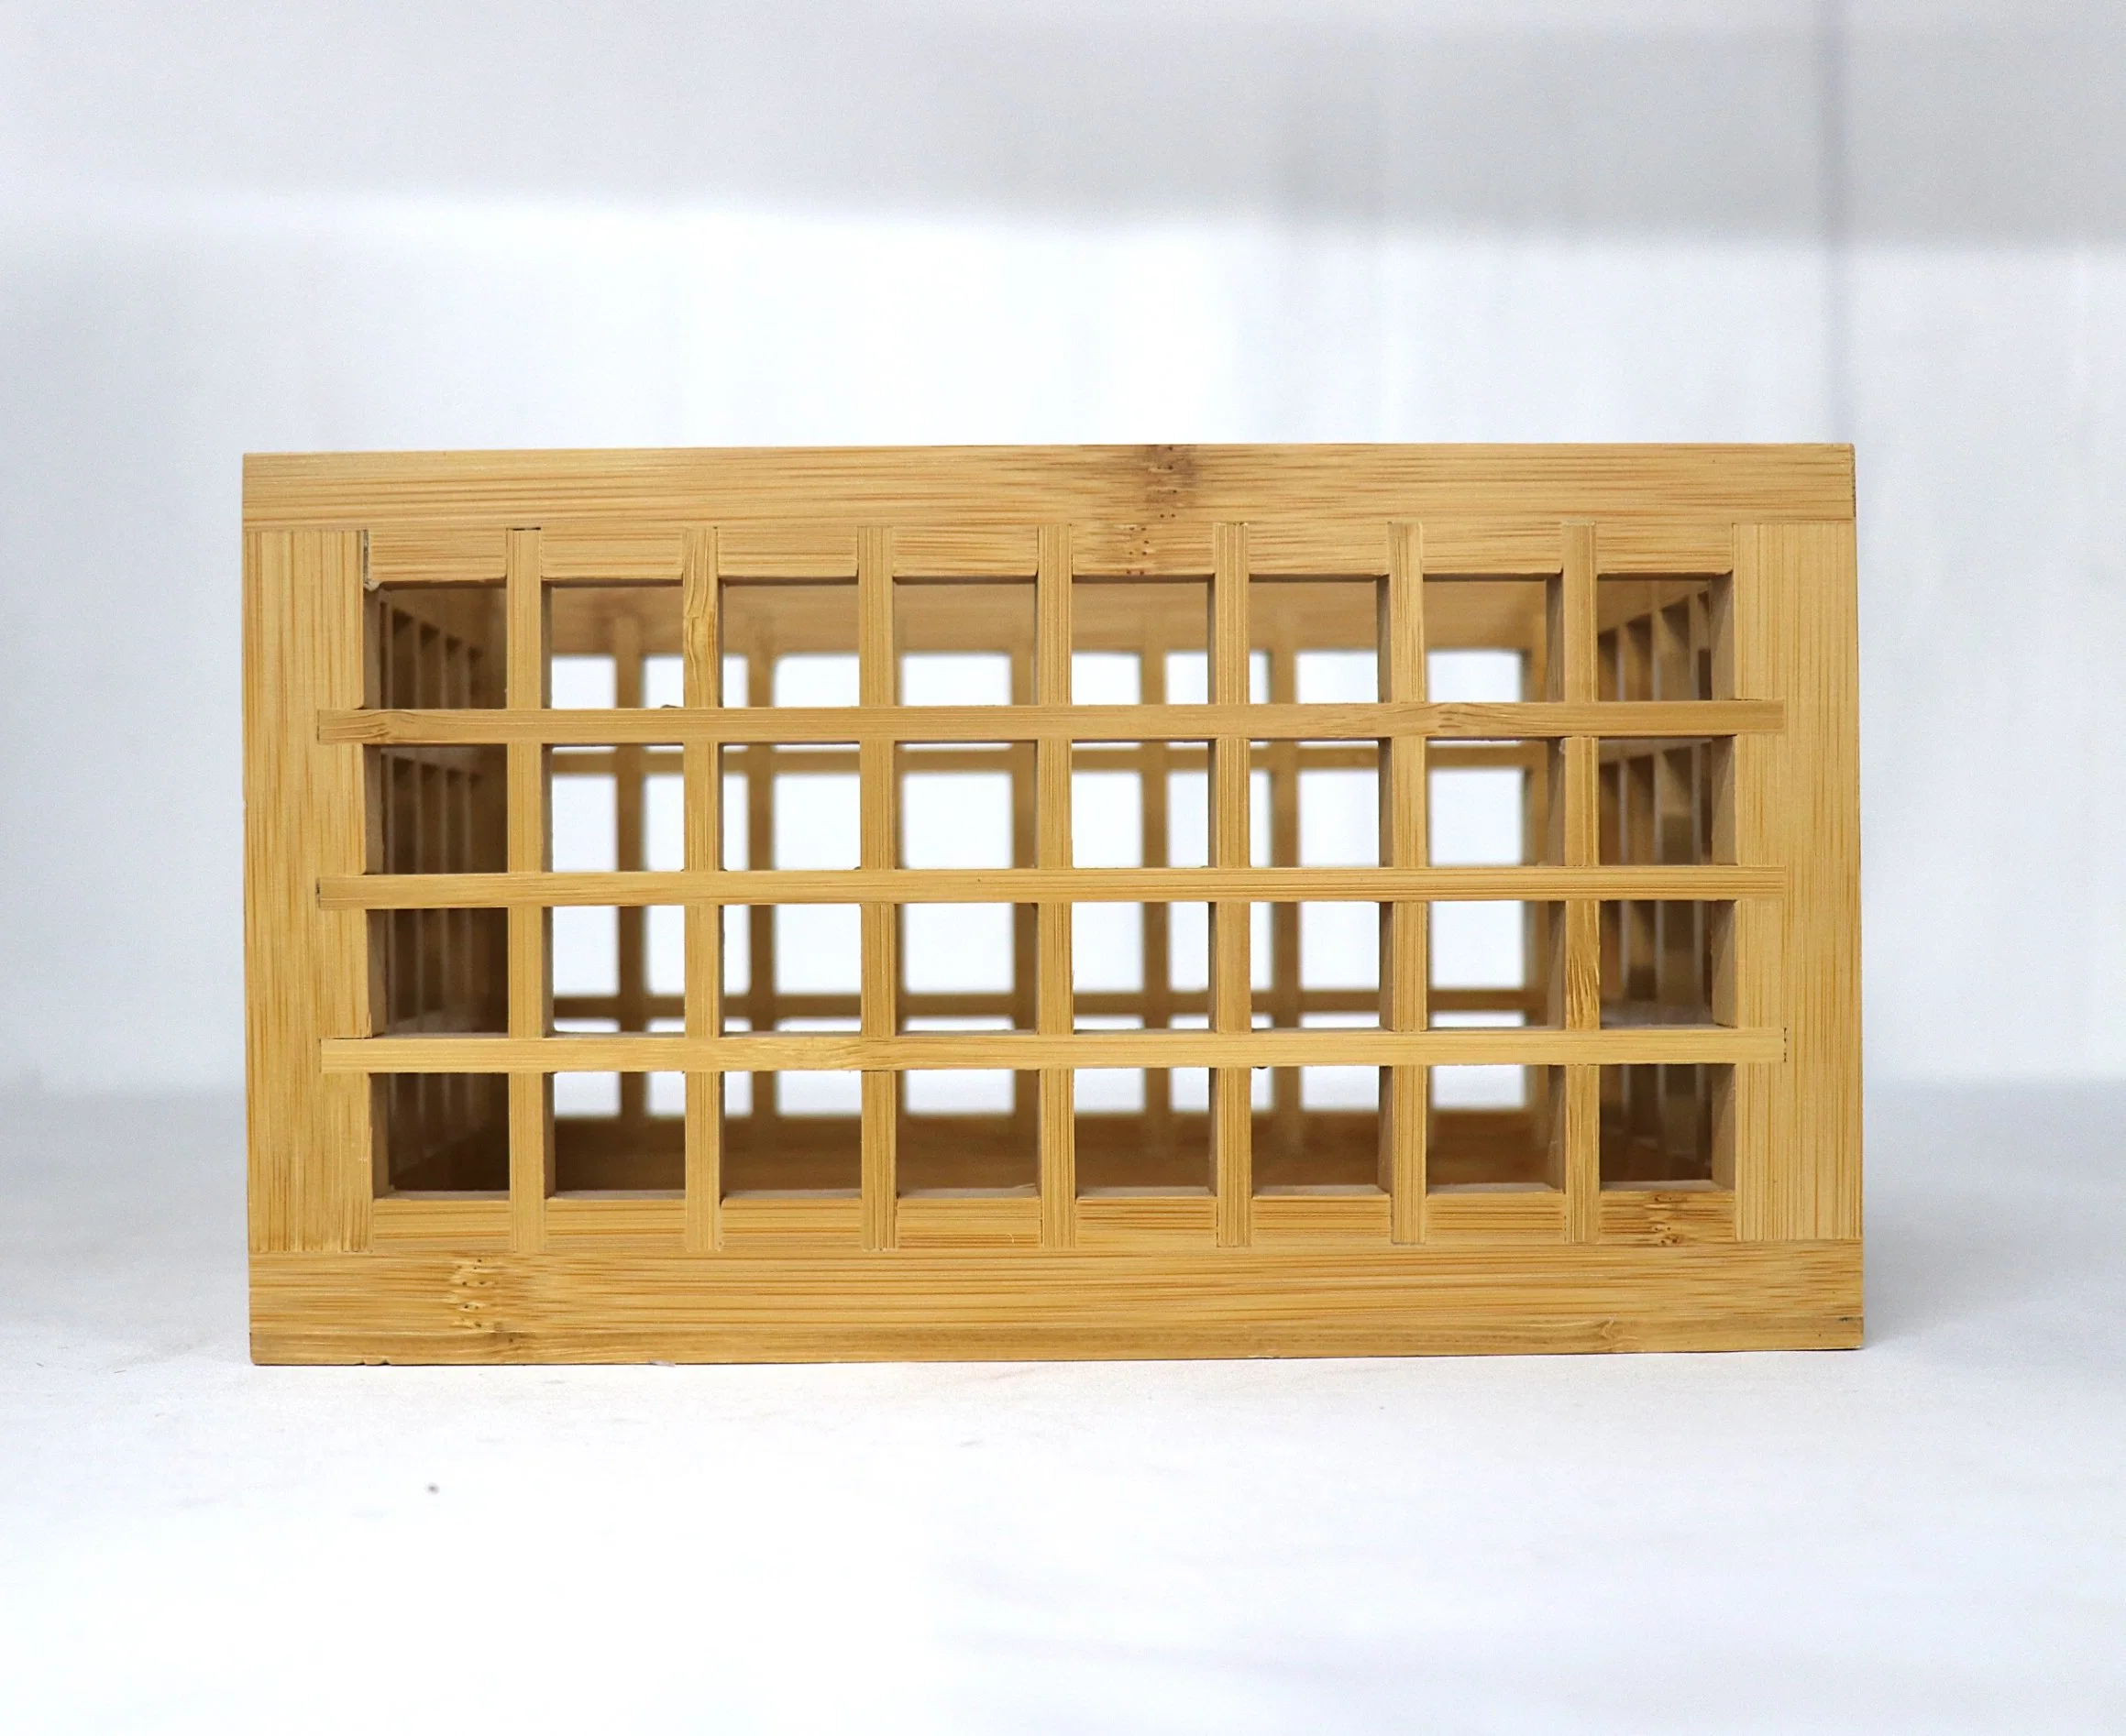 Wholesale/Supplier Eco Friendly Bamboo Wooden Storage Stash Box Glass Storage Box